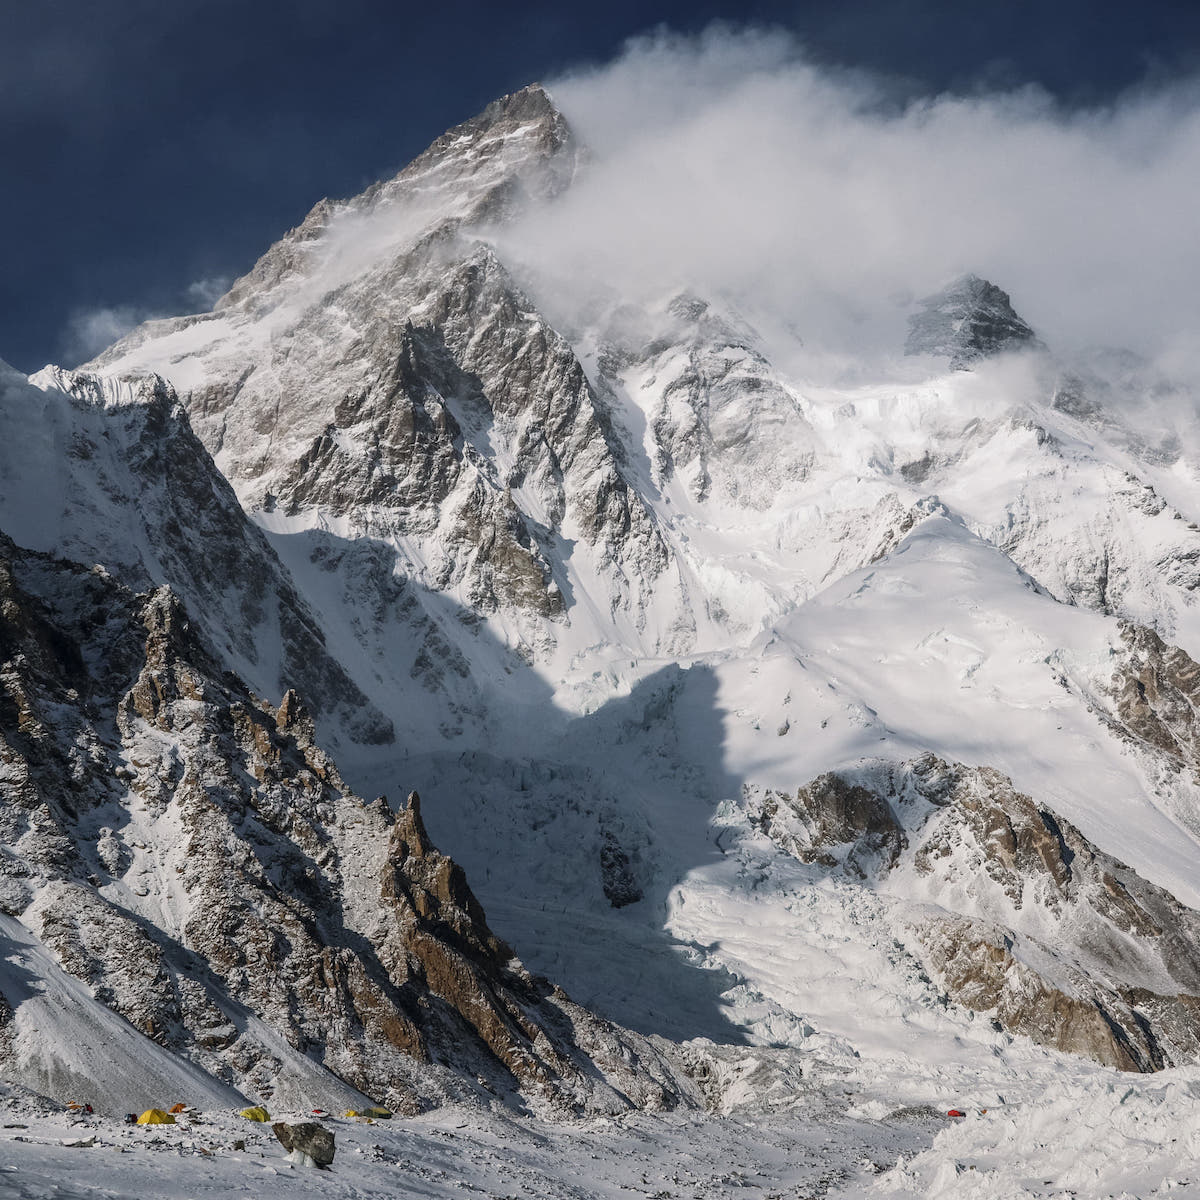 K2 (8611m) looms above base camp on the Godwin Austen Glacier. [Photo] Alex Gavan